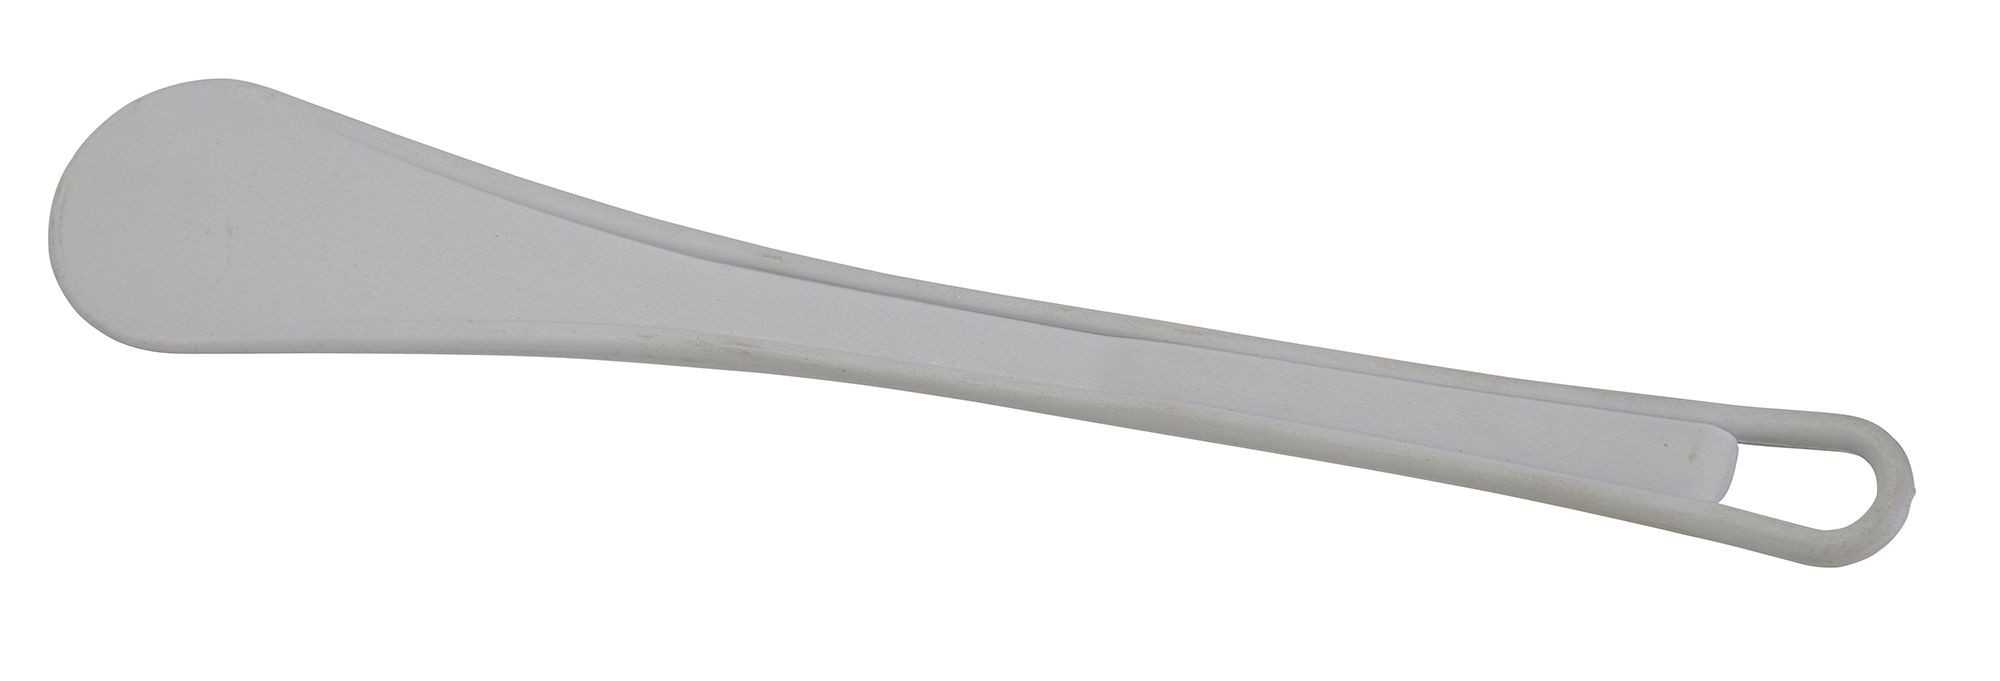 Winco NSP-20W Heat Resistant Nylon Mixing Paddle, White 20"